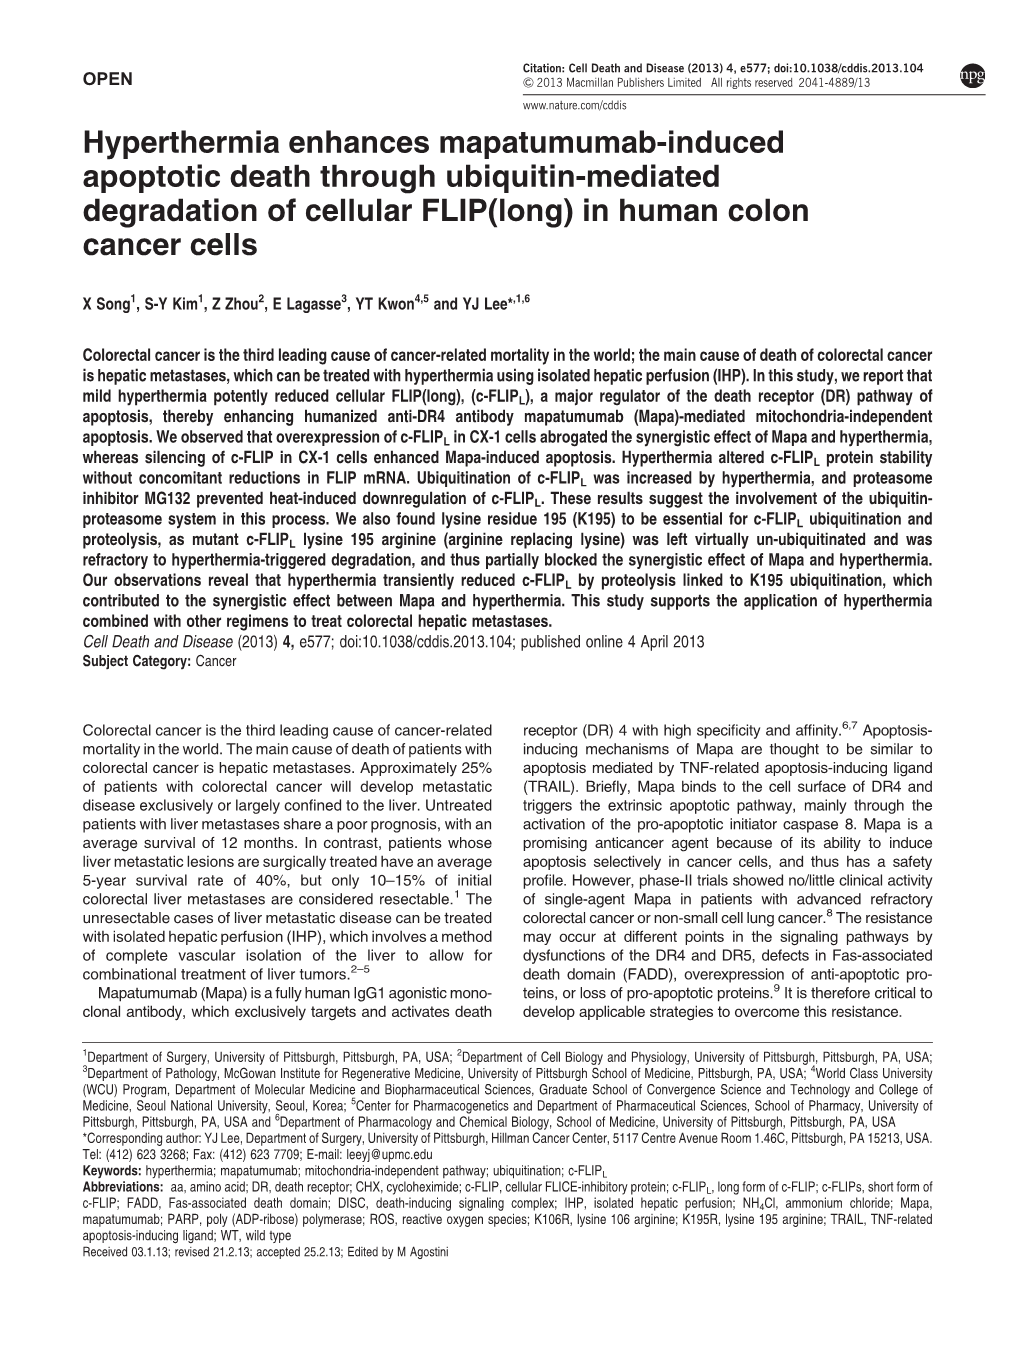 Hyperthermia Enhances Mapatumumab-Induced Apoptotic Death Through Ubiquitin-Mediated Degradation of Cellular FLIP(Long) in Human Colon Cancer Cells